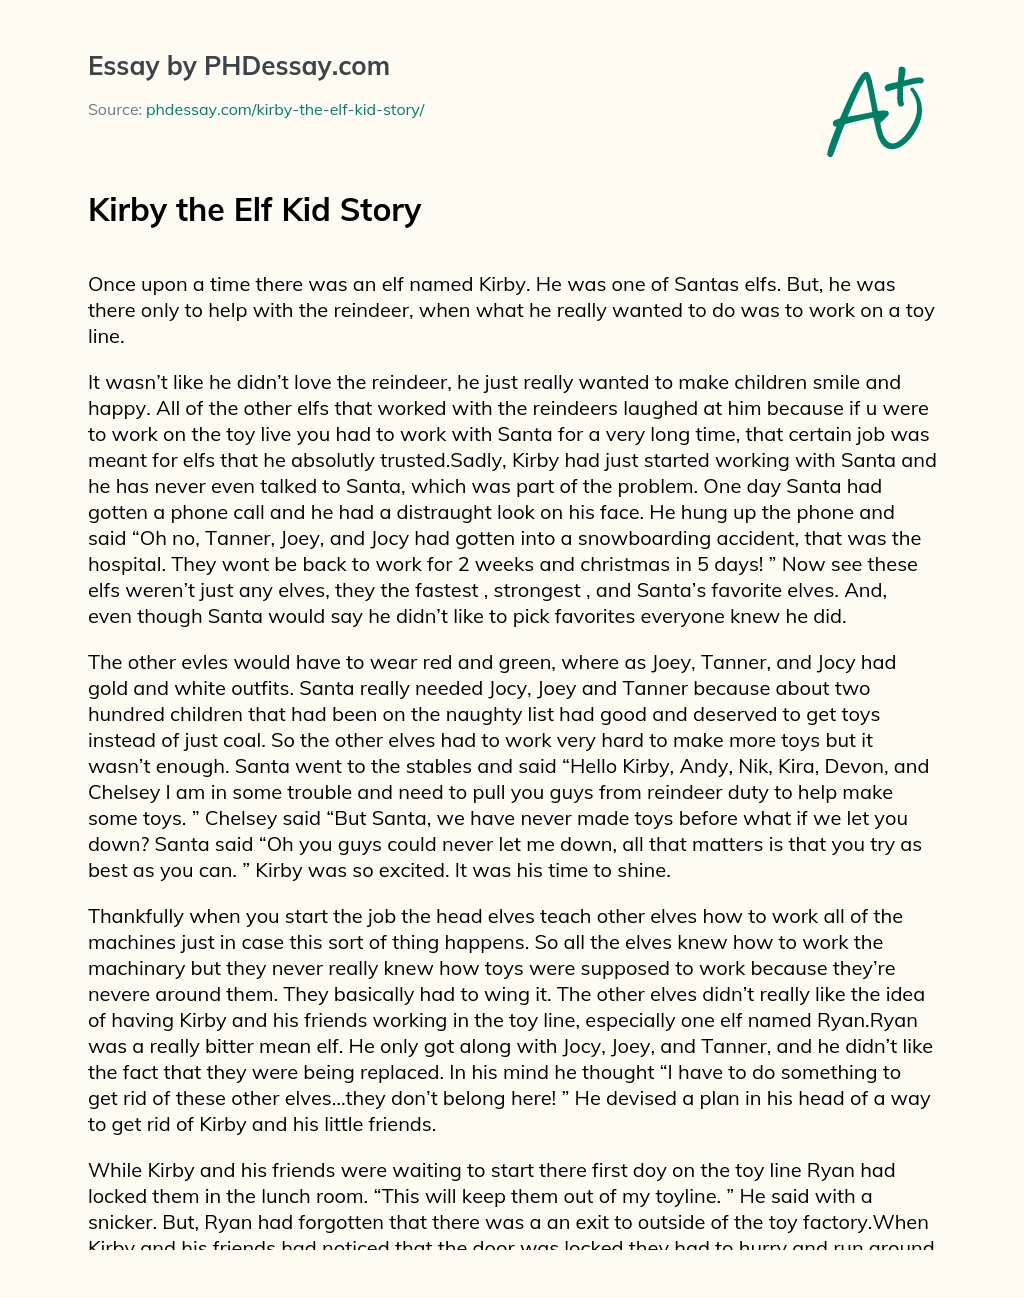 Kirby the Elf Kid Story essay